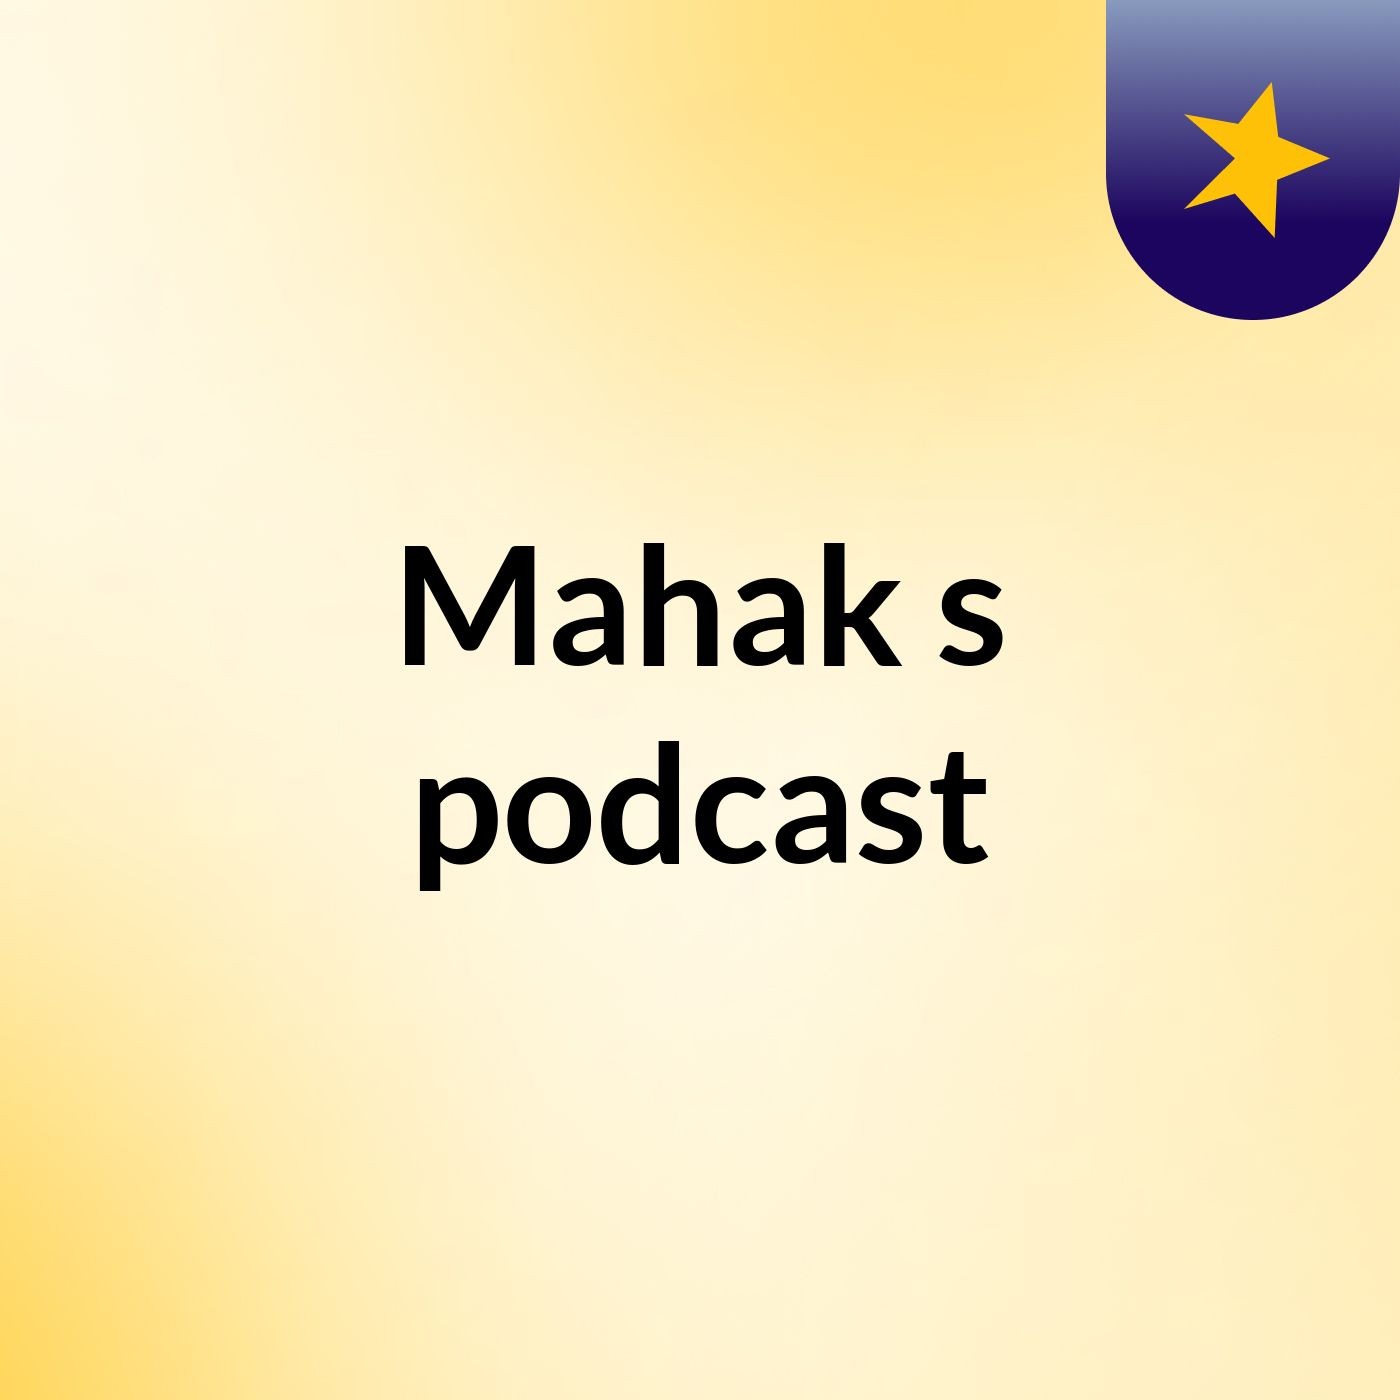 Episode 2 - Mahak's podcast